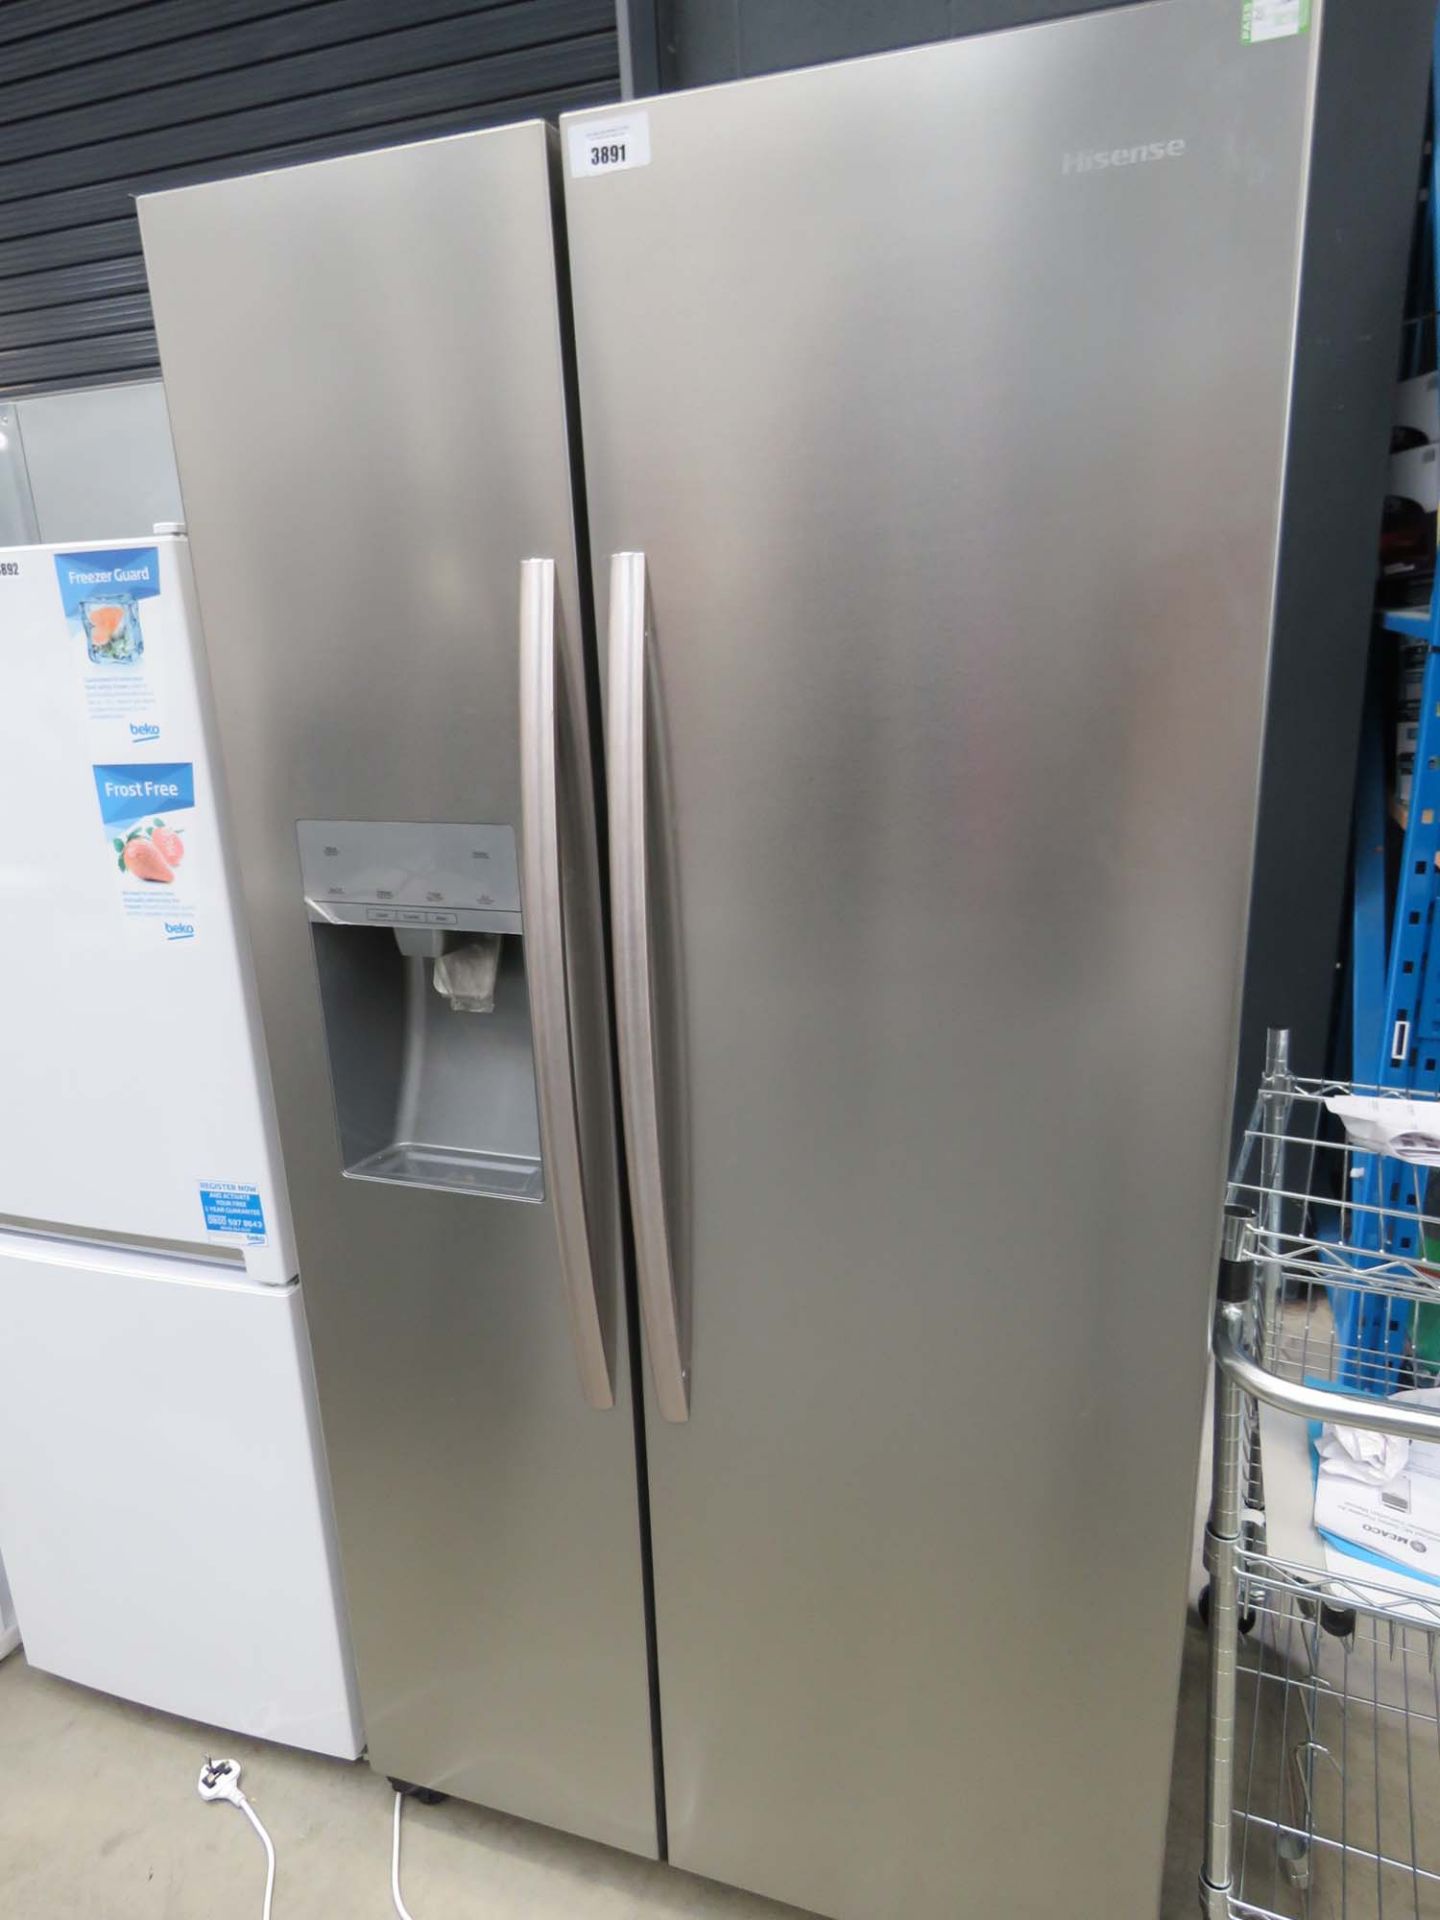 3388 Double door American style Hisense fridge freezer